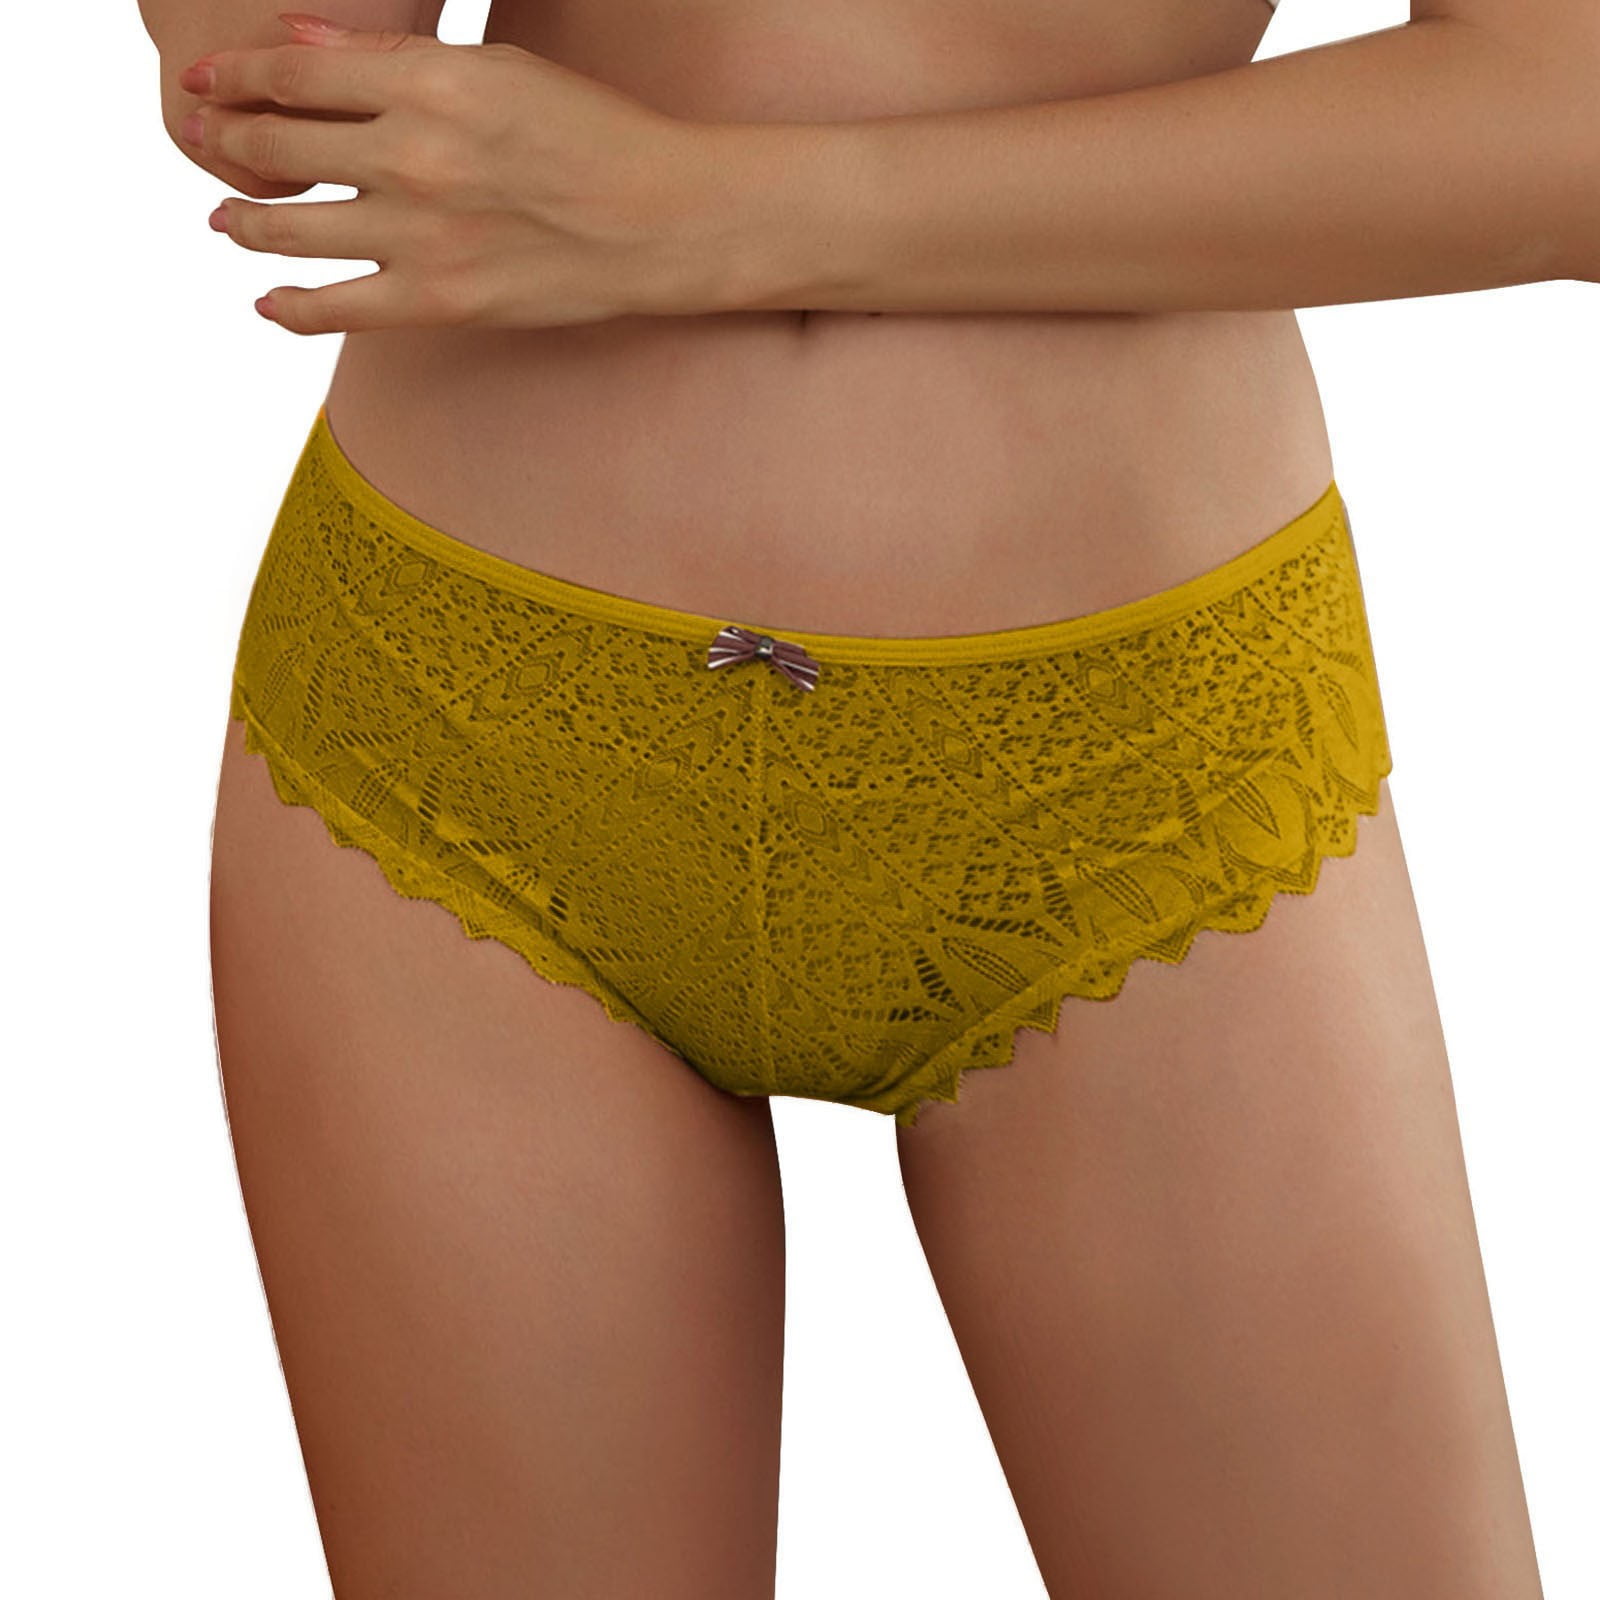 ZRBYWB Women's Underwear Low Waist Mature Girls Tight Ladies SizeLace Trim  Spandex Pantys Brief Underwear For Panties For Women 